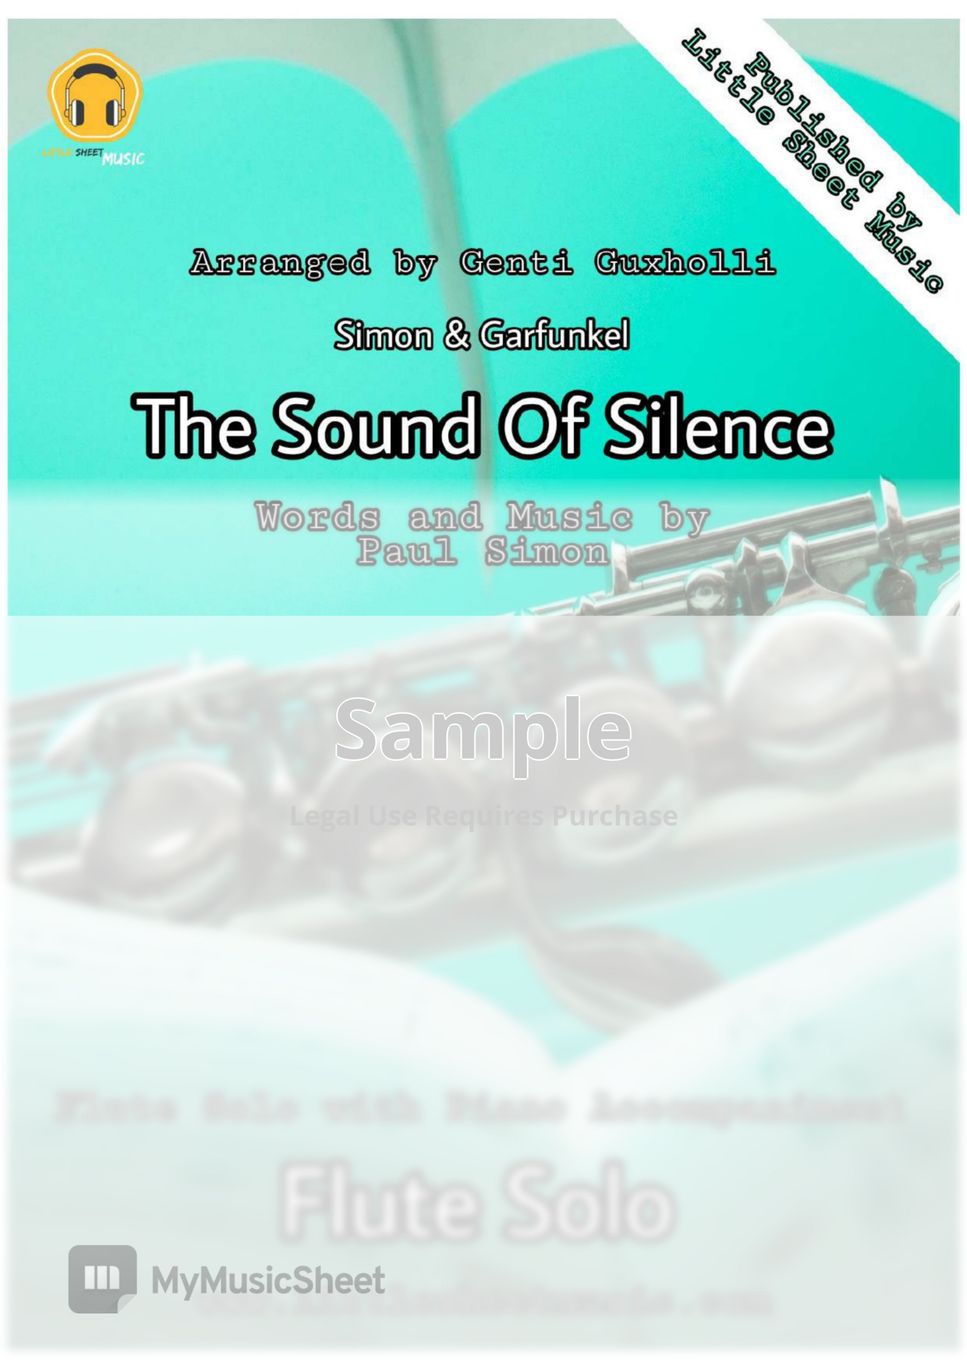 Simon & Garfunkel - The Sound Of Silence (Flute Solo with Piano Accompaniment) by Genti Guxholli